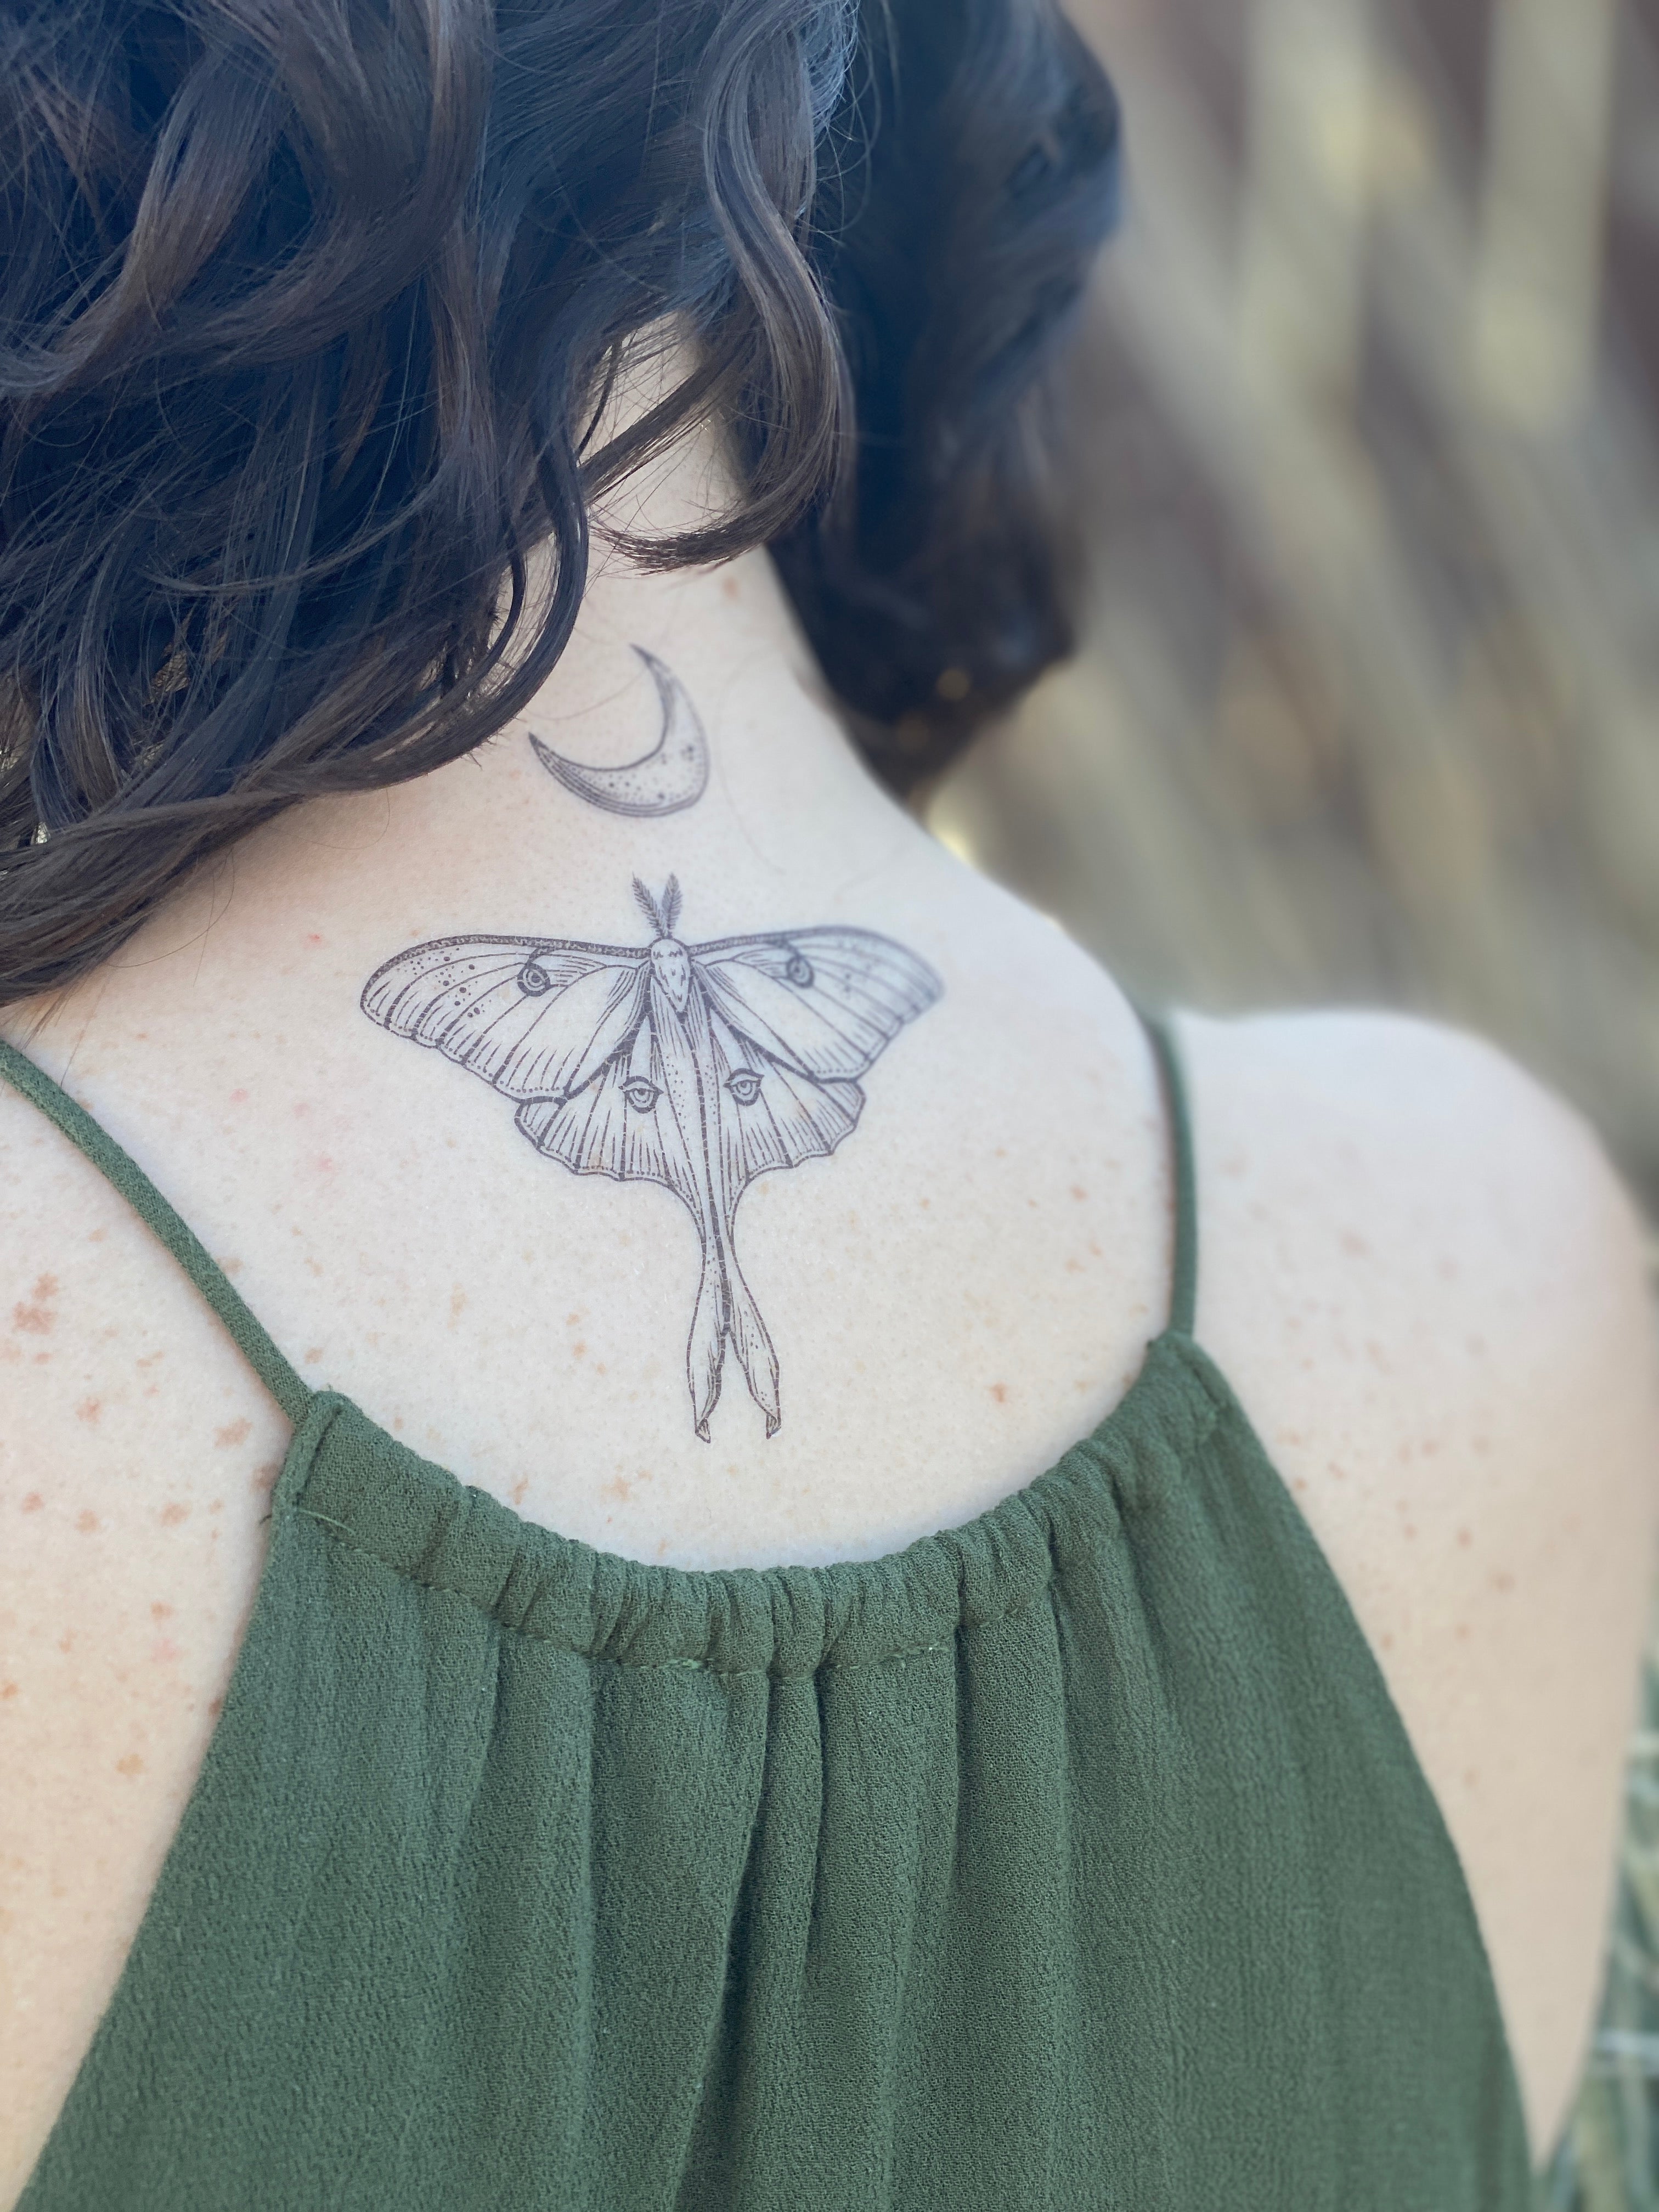 Luna moth tattoo design raw by Shon2 on DeviantArt